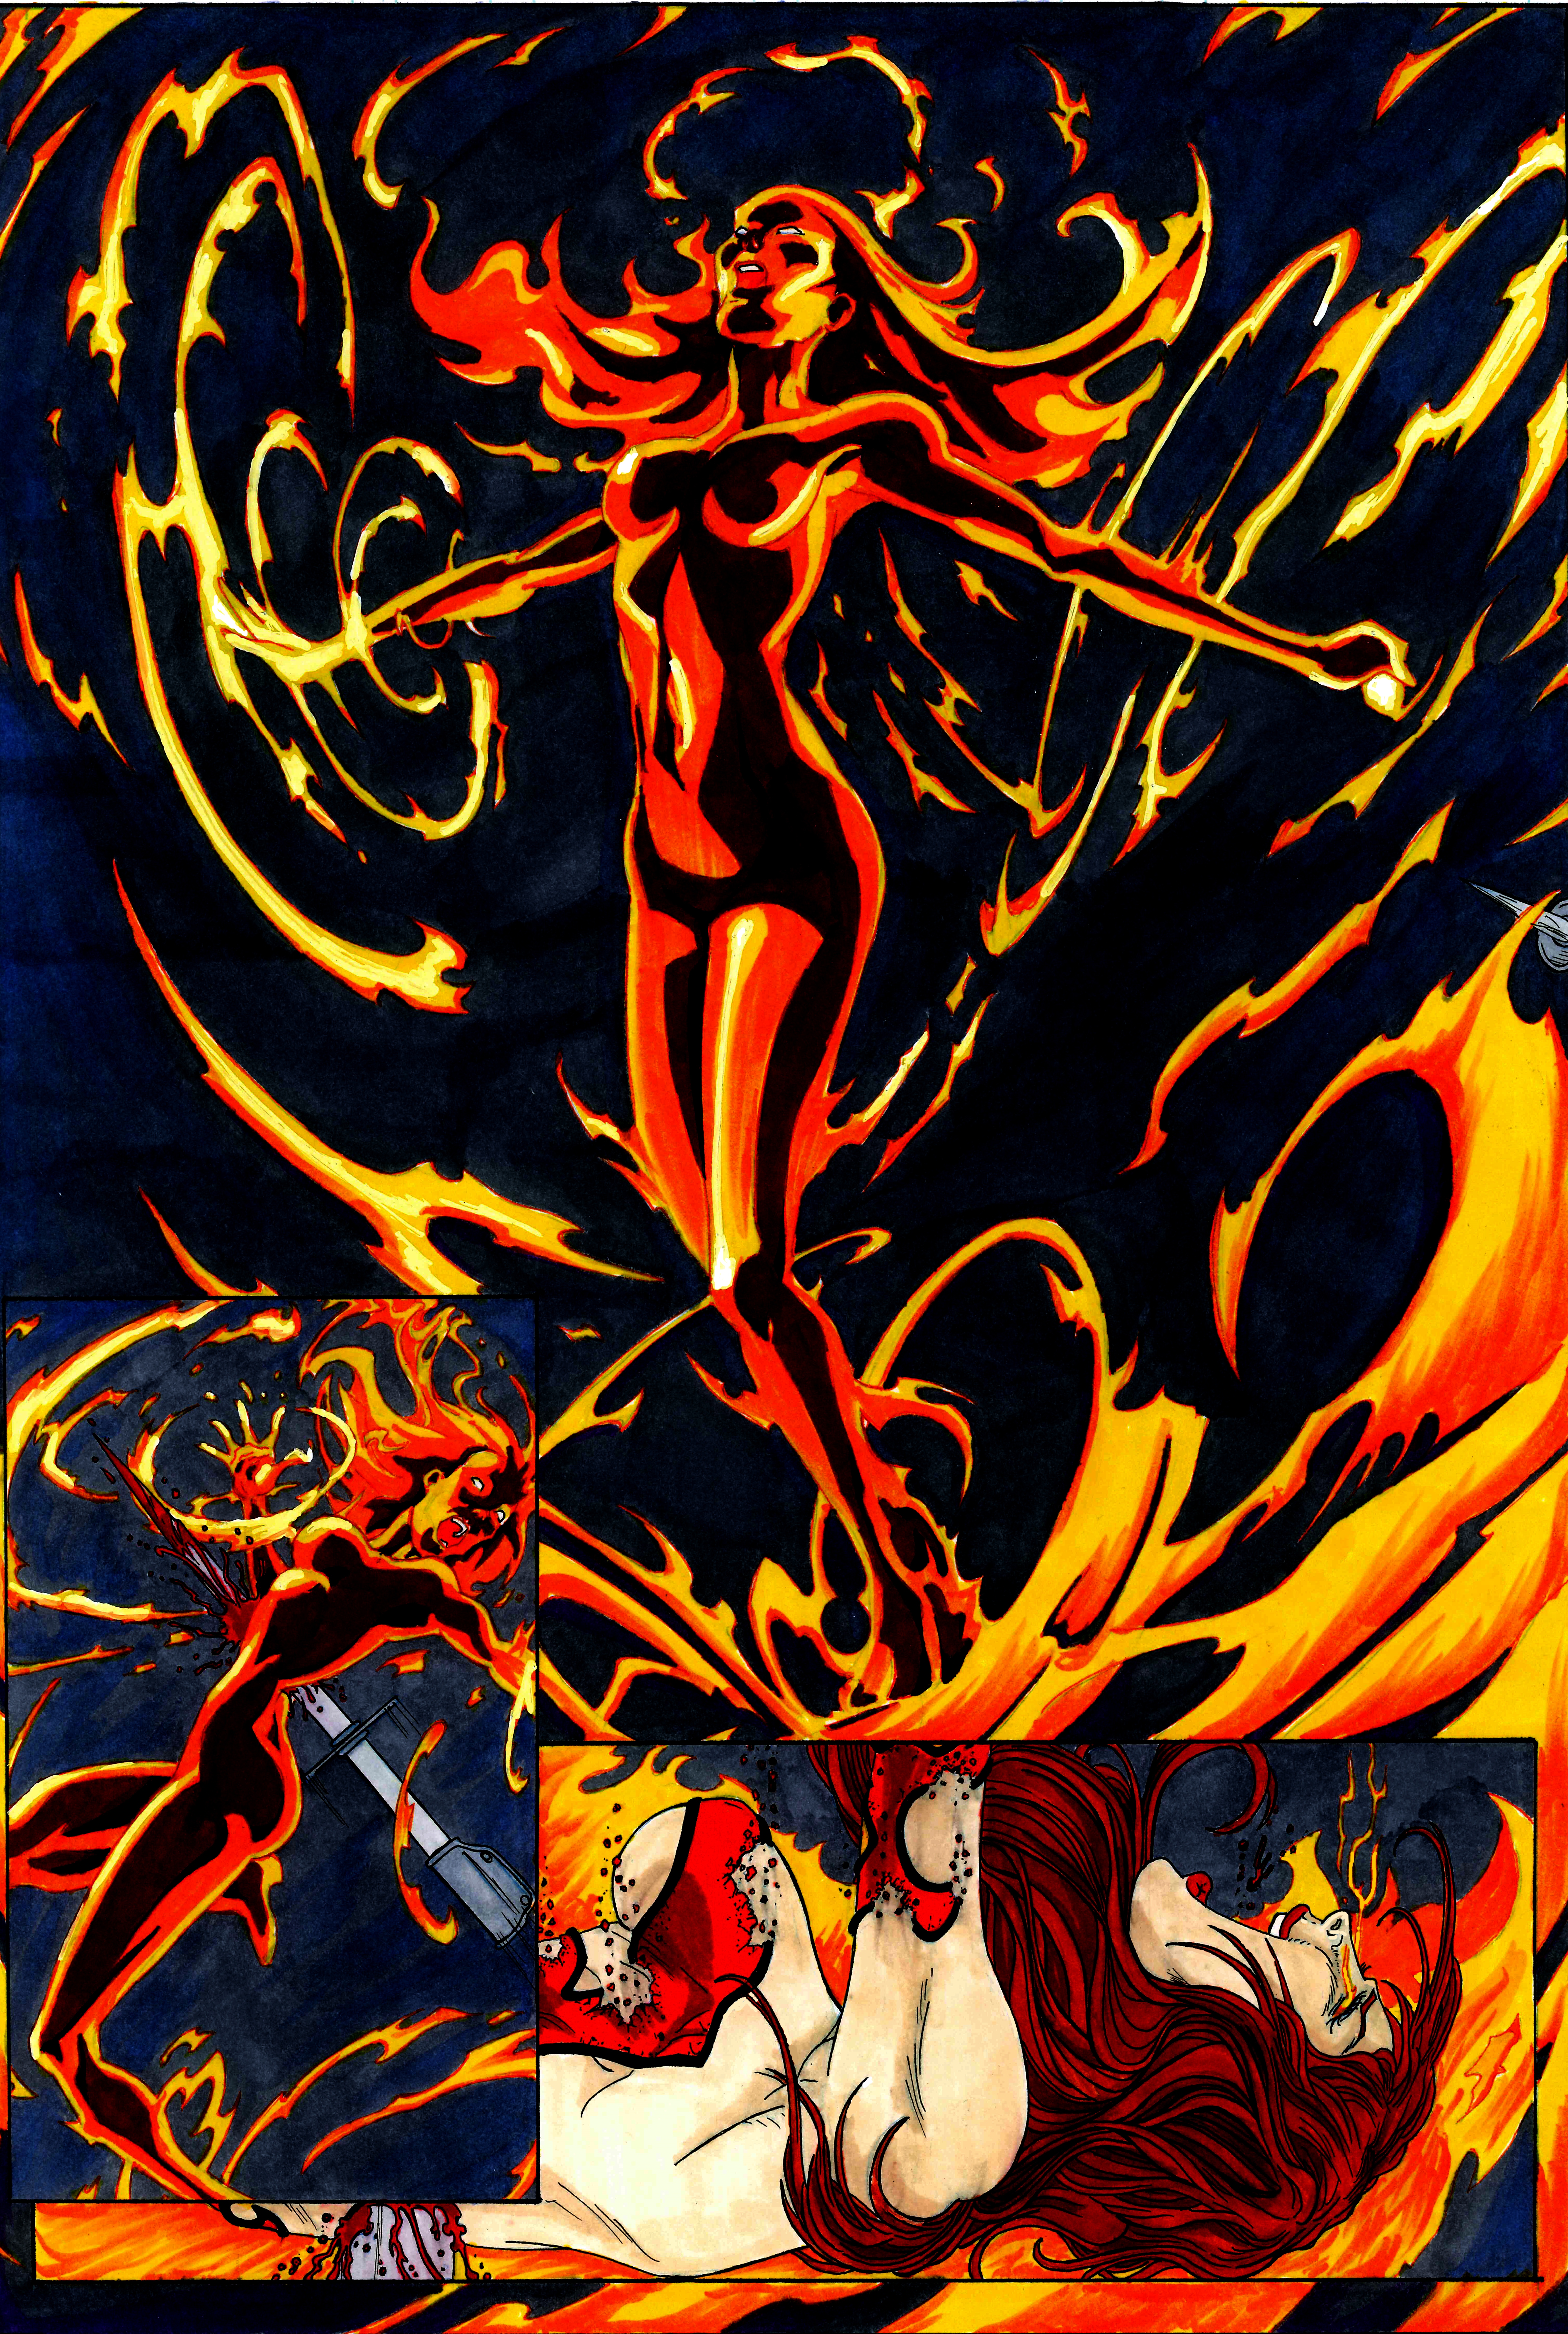 X-men Supreme Issue 68: The Phoenix Saga Part 1 Panel 4